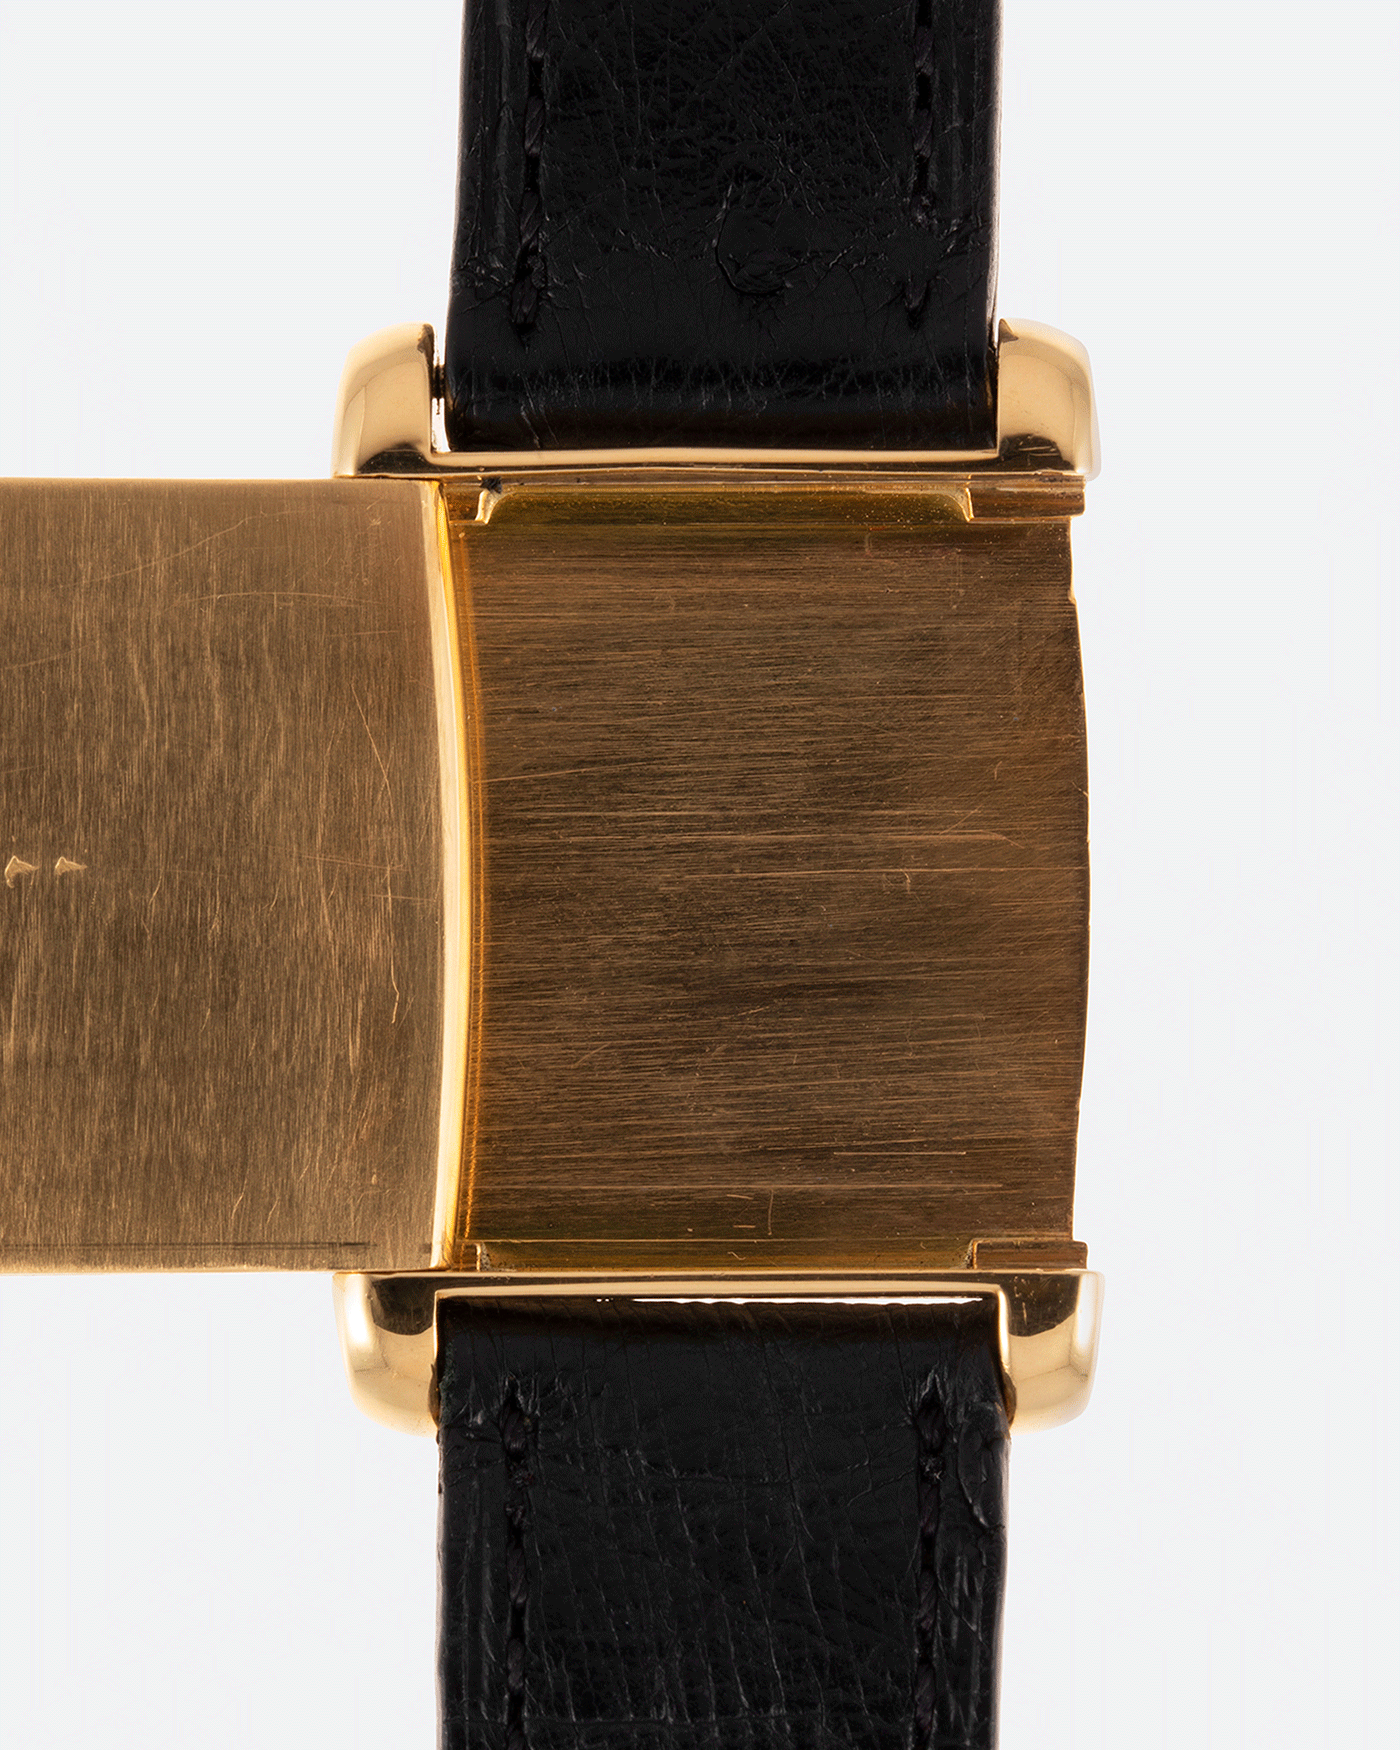 Brand: Cartier Year: 1970s Model: Tank ‘Reverso’ Material: 18k Yellow Gold Movement: Manual-winding caliber 610  Case Diameter: 32mm X 23mm Lug Width: 16mm Bracelet/Strap: Black Leather Strap and 18k Cartier Yellow Gold Deployant